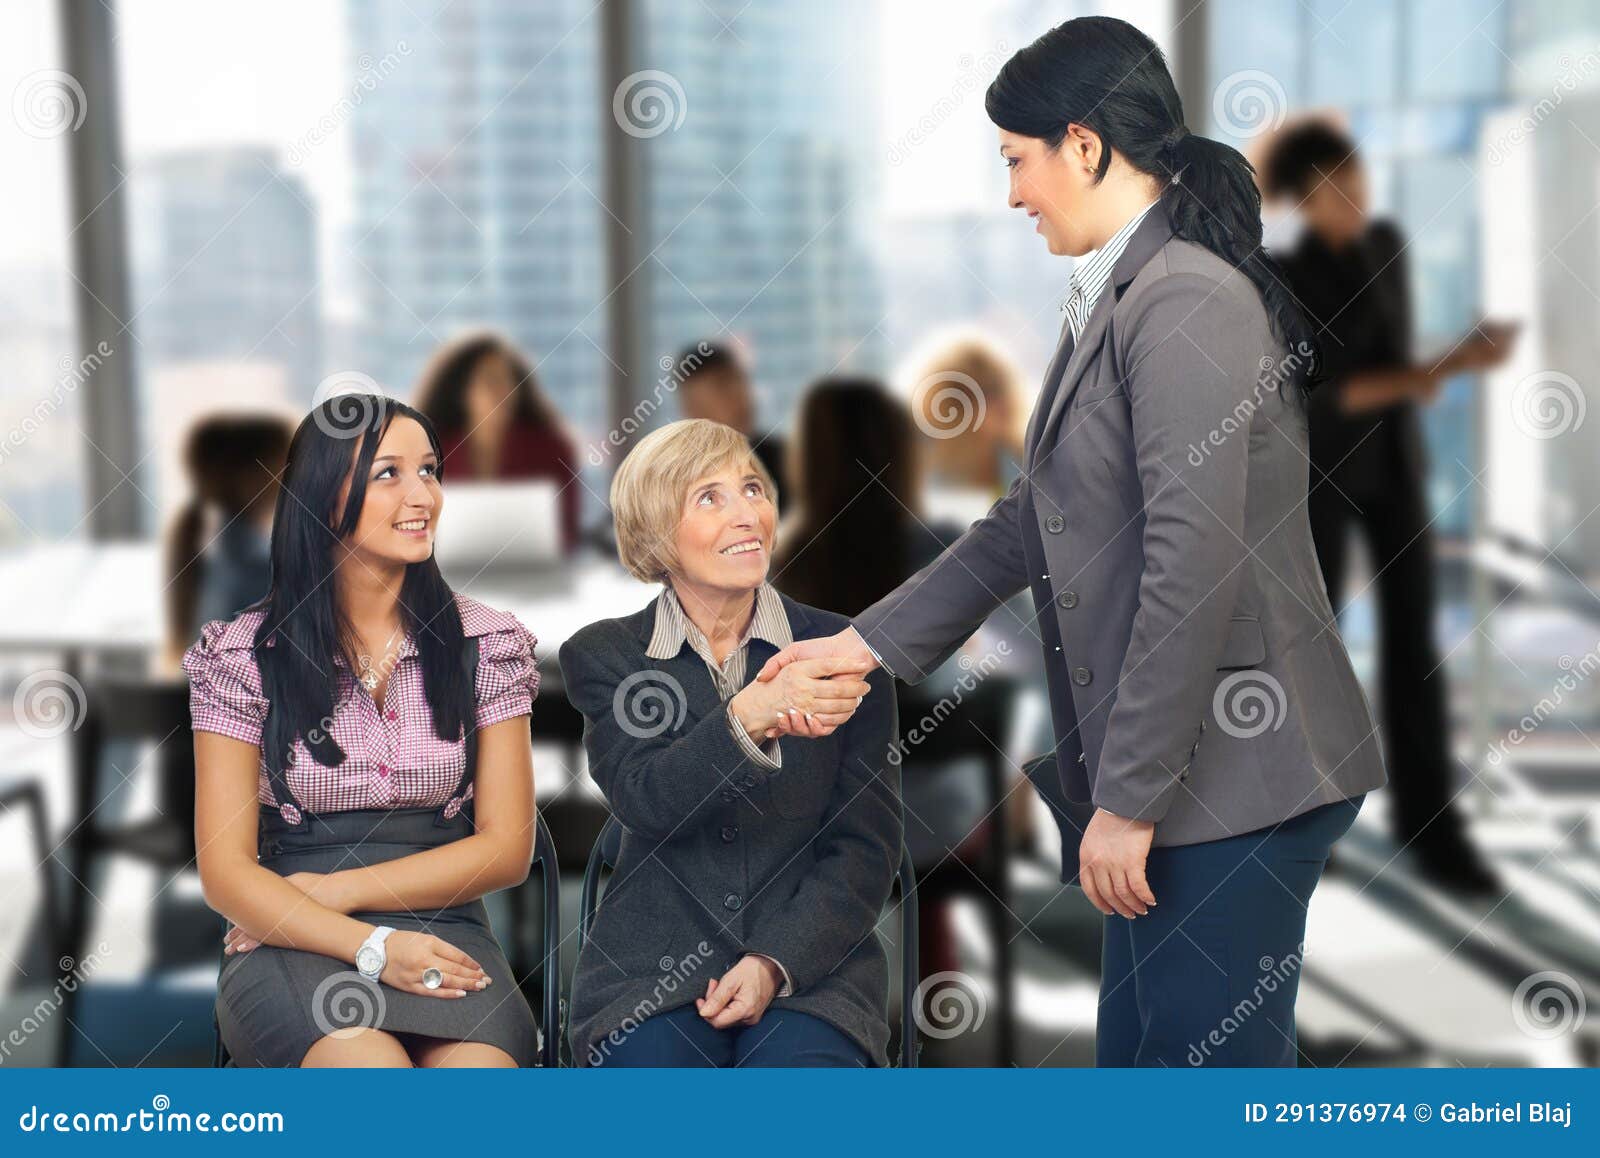 business woman make acquaintance